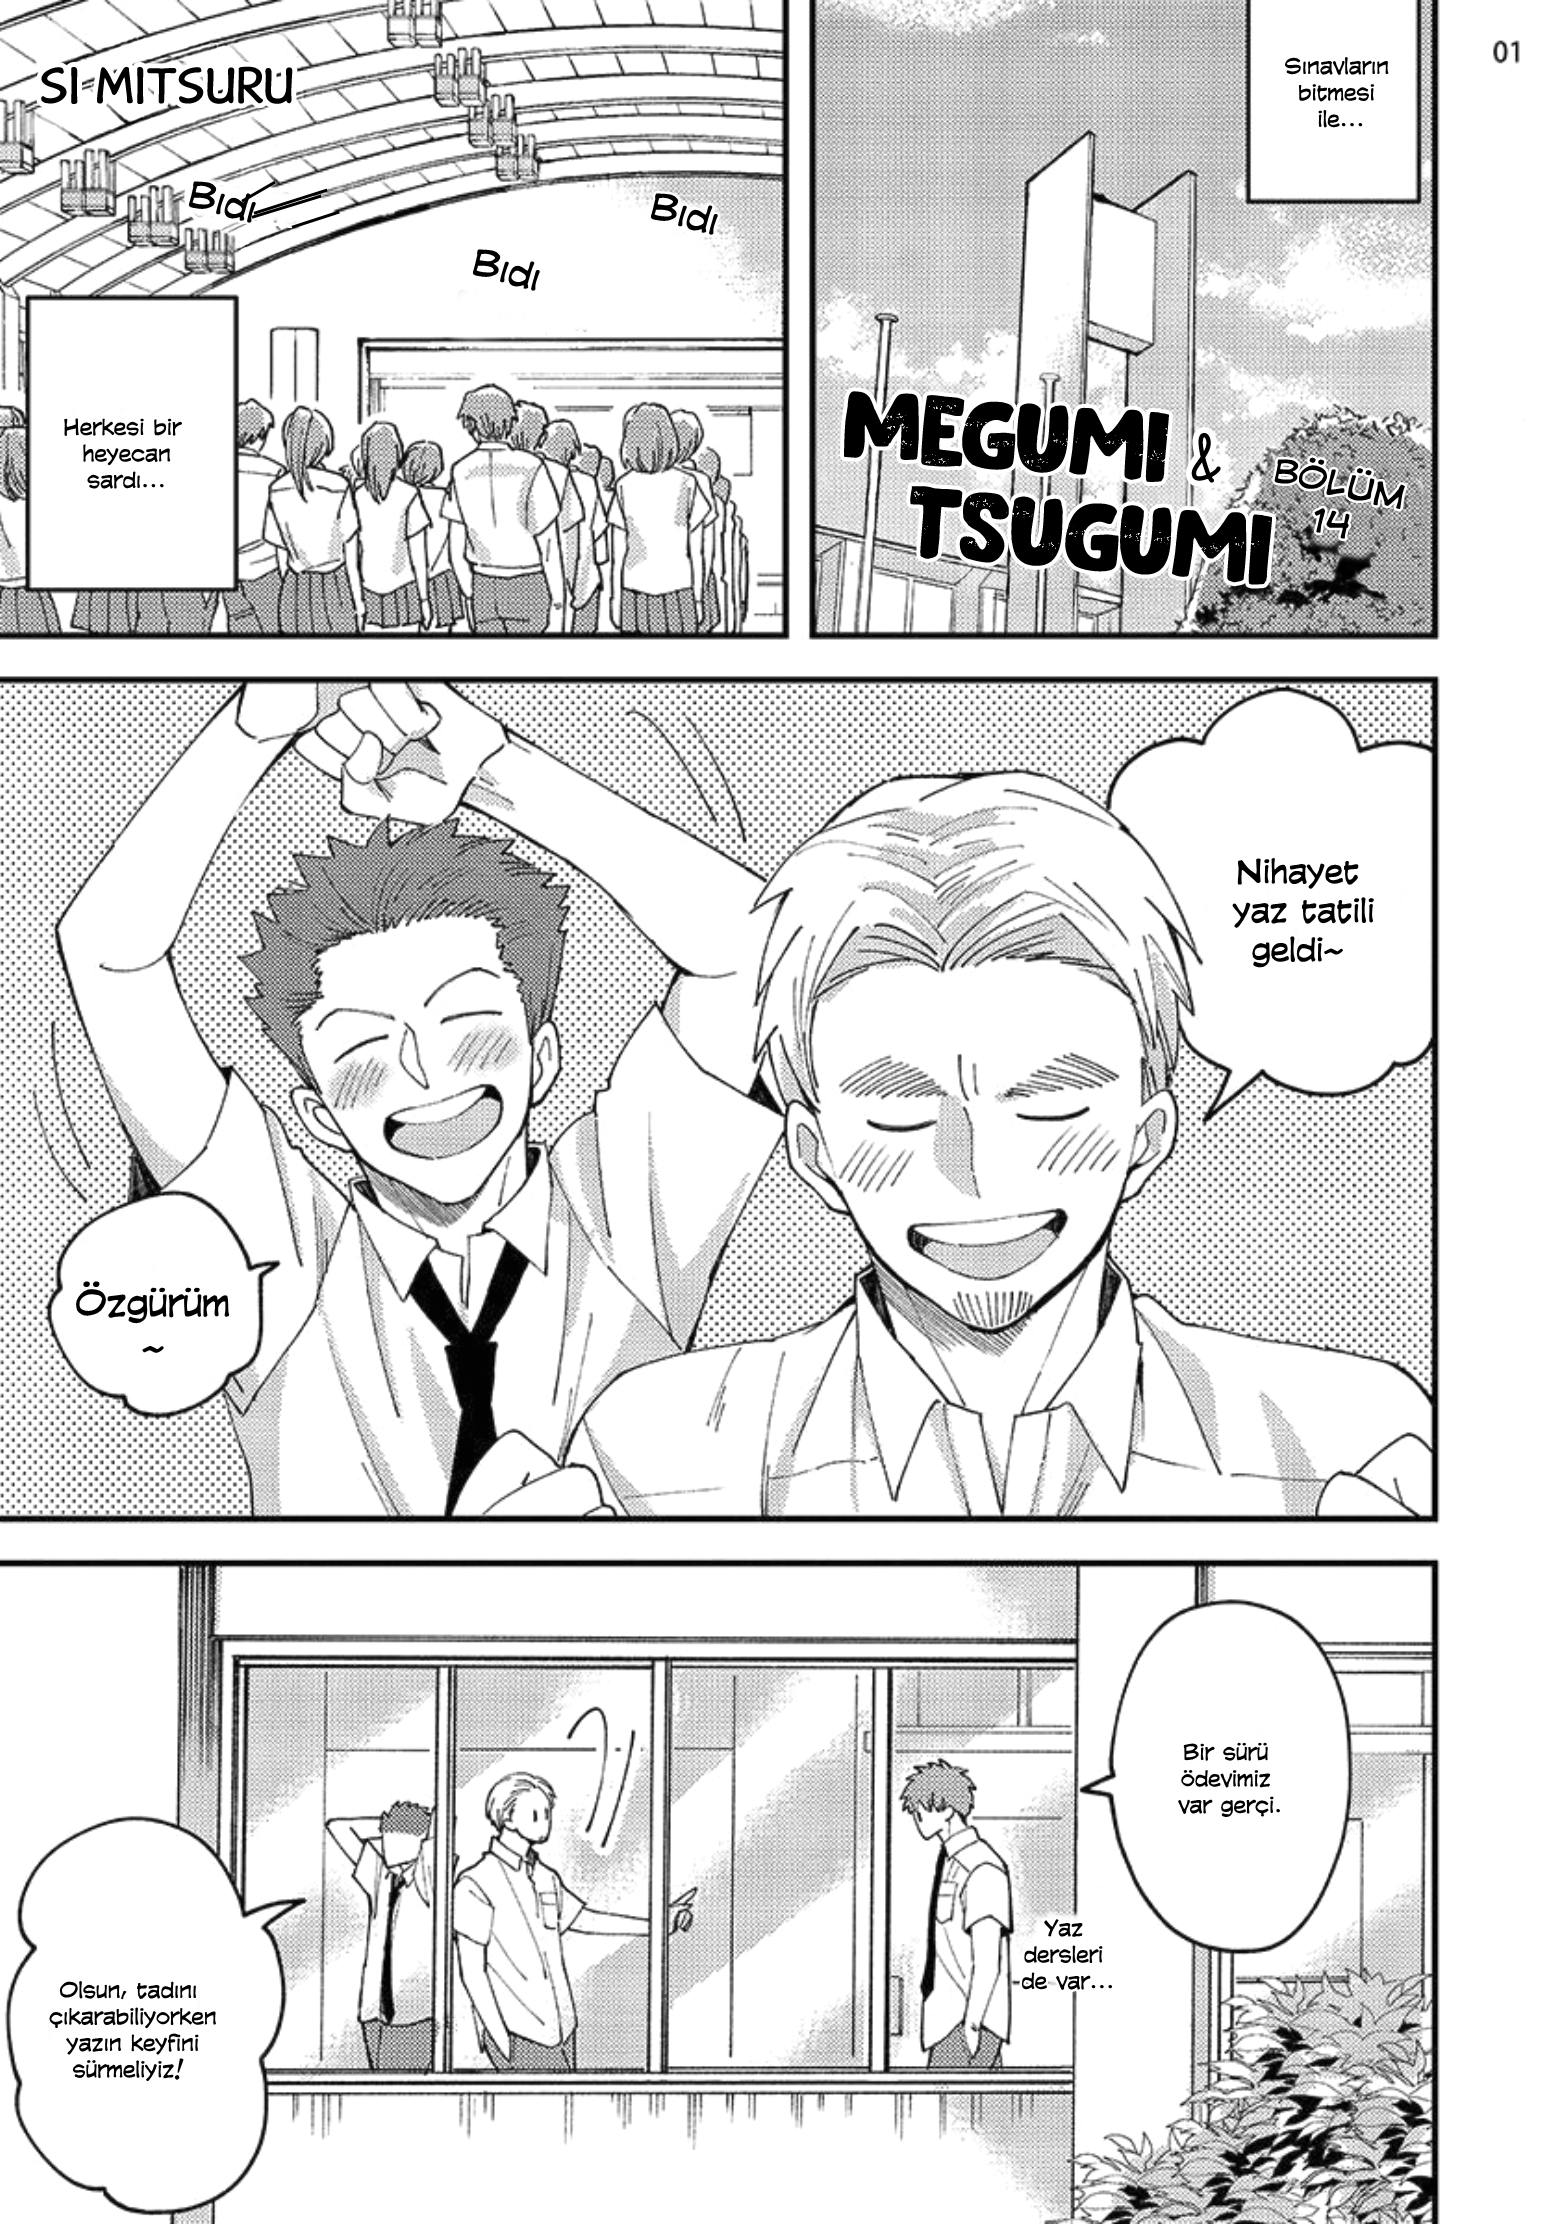 Megumi and Tsugumi: Chapter 14 - Page 2